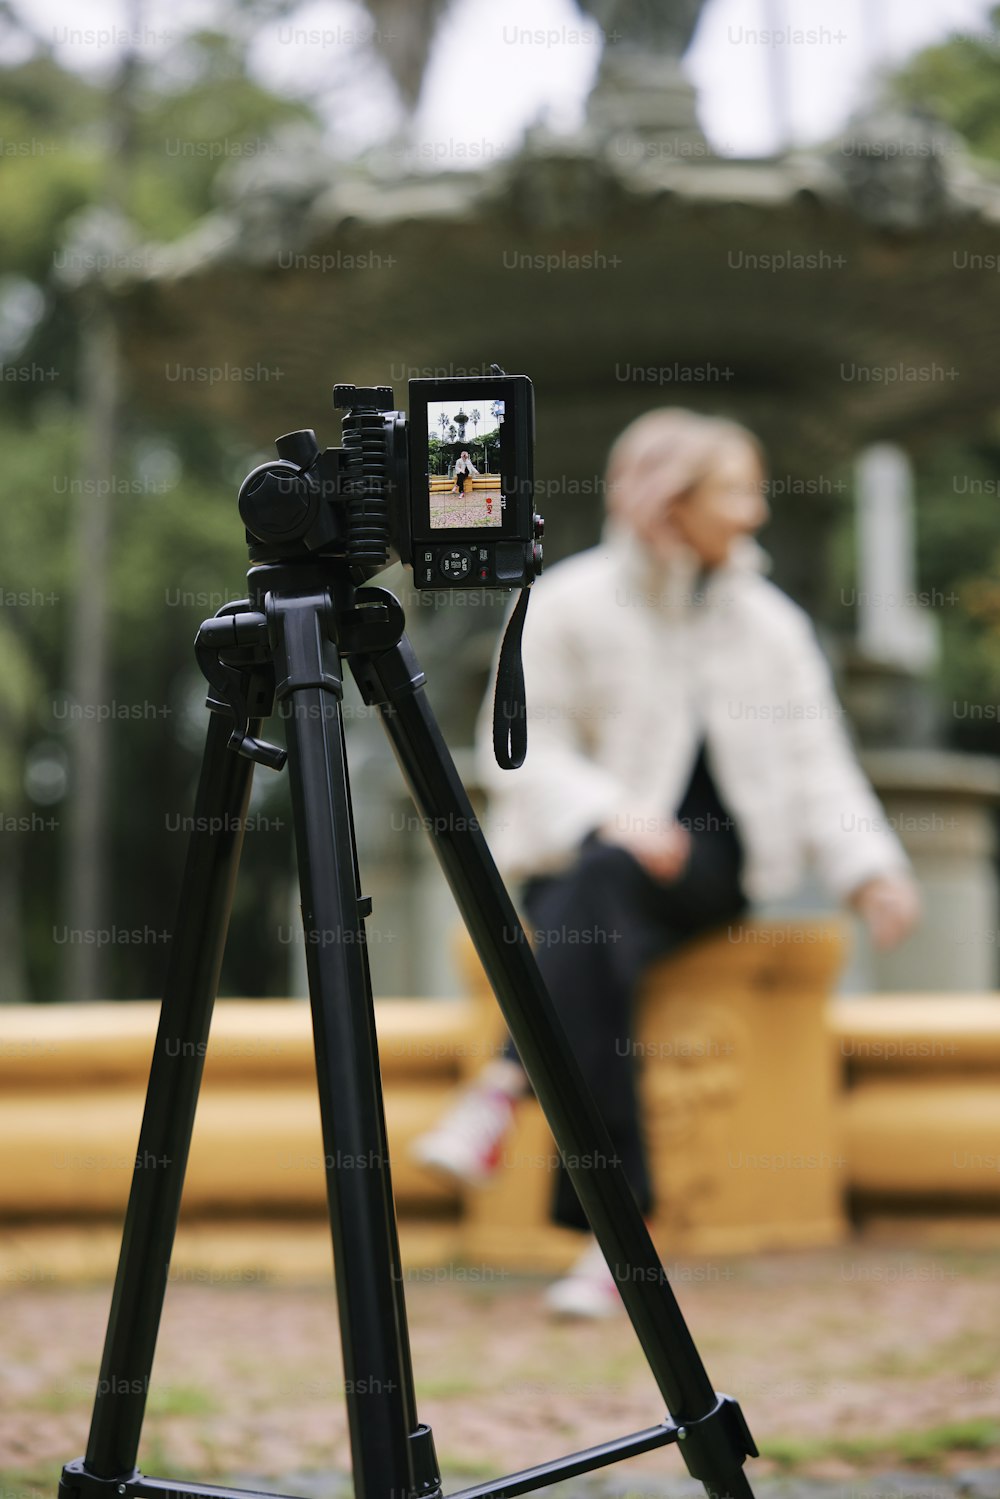 una persona seduta su una panchina con una macchina fotografica su un treppiede